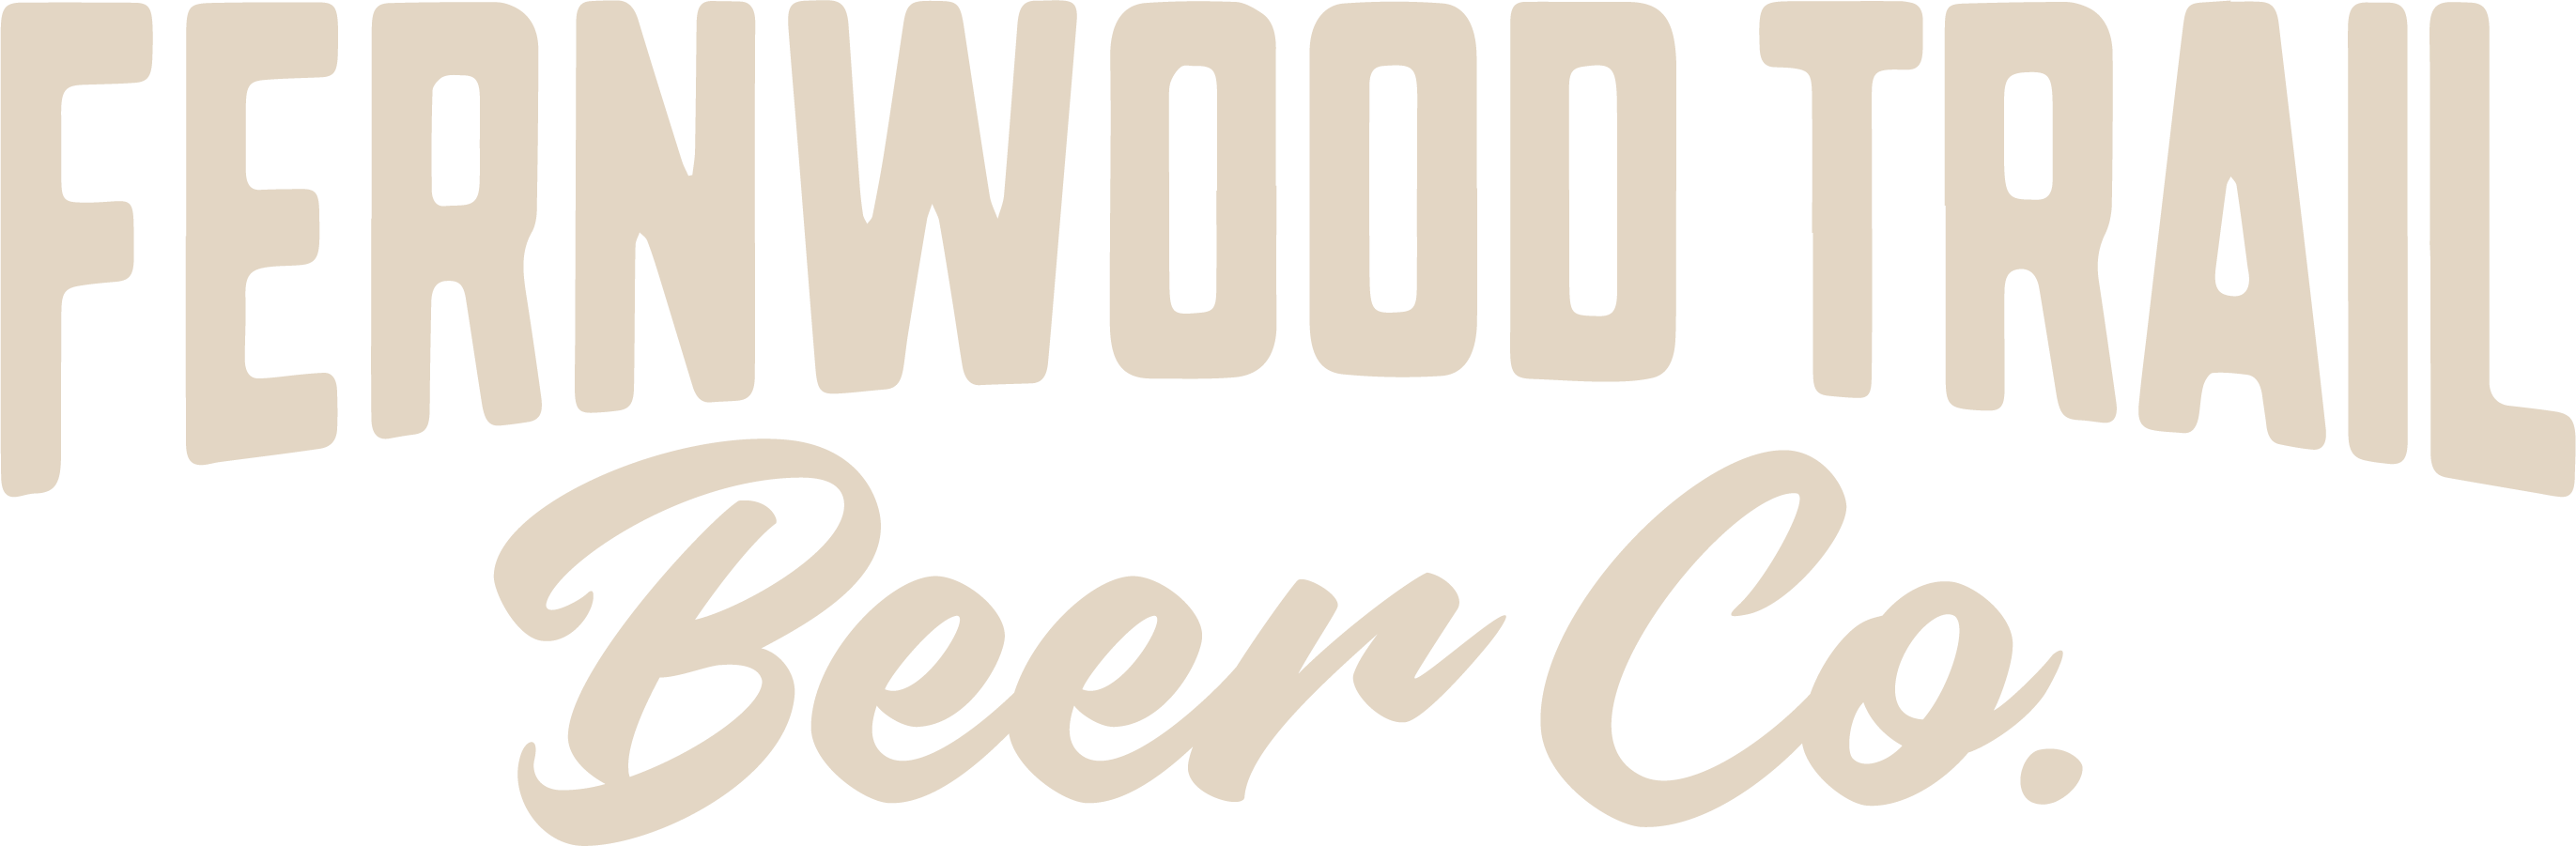 Fernwood Trail Beer Co. Online Store